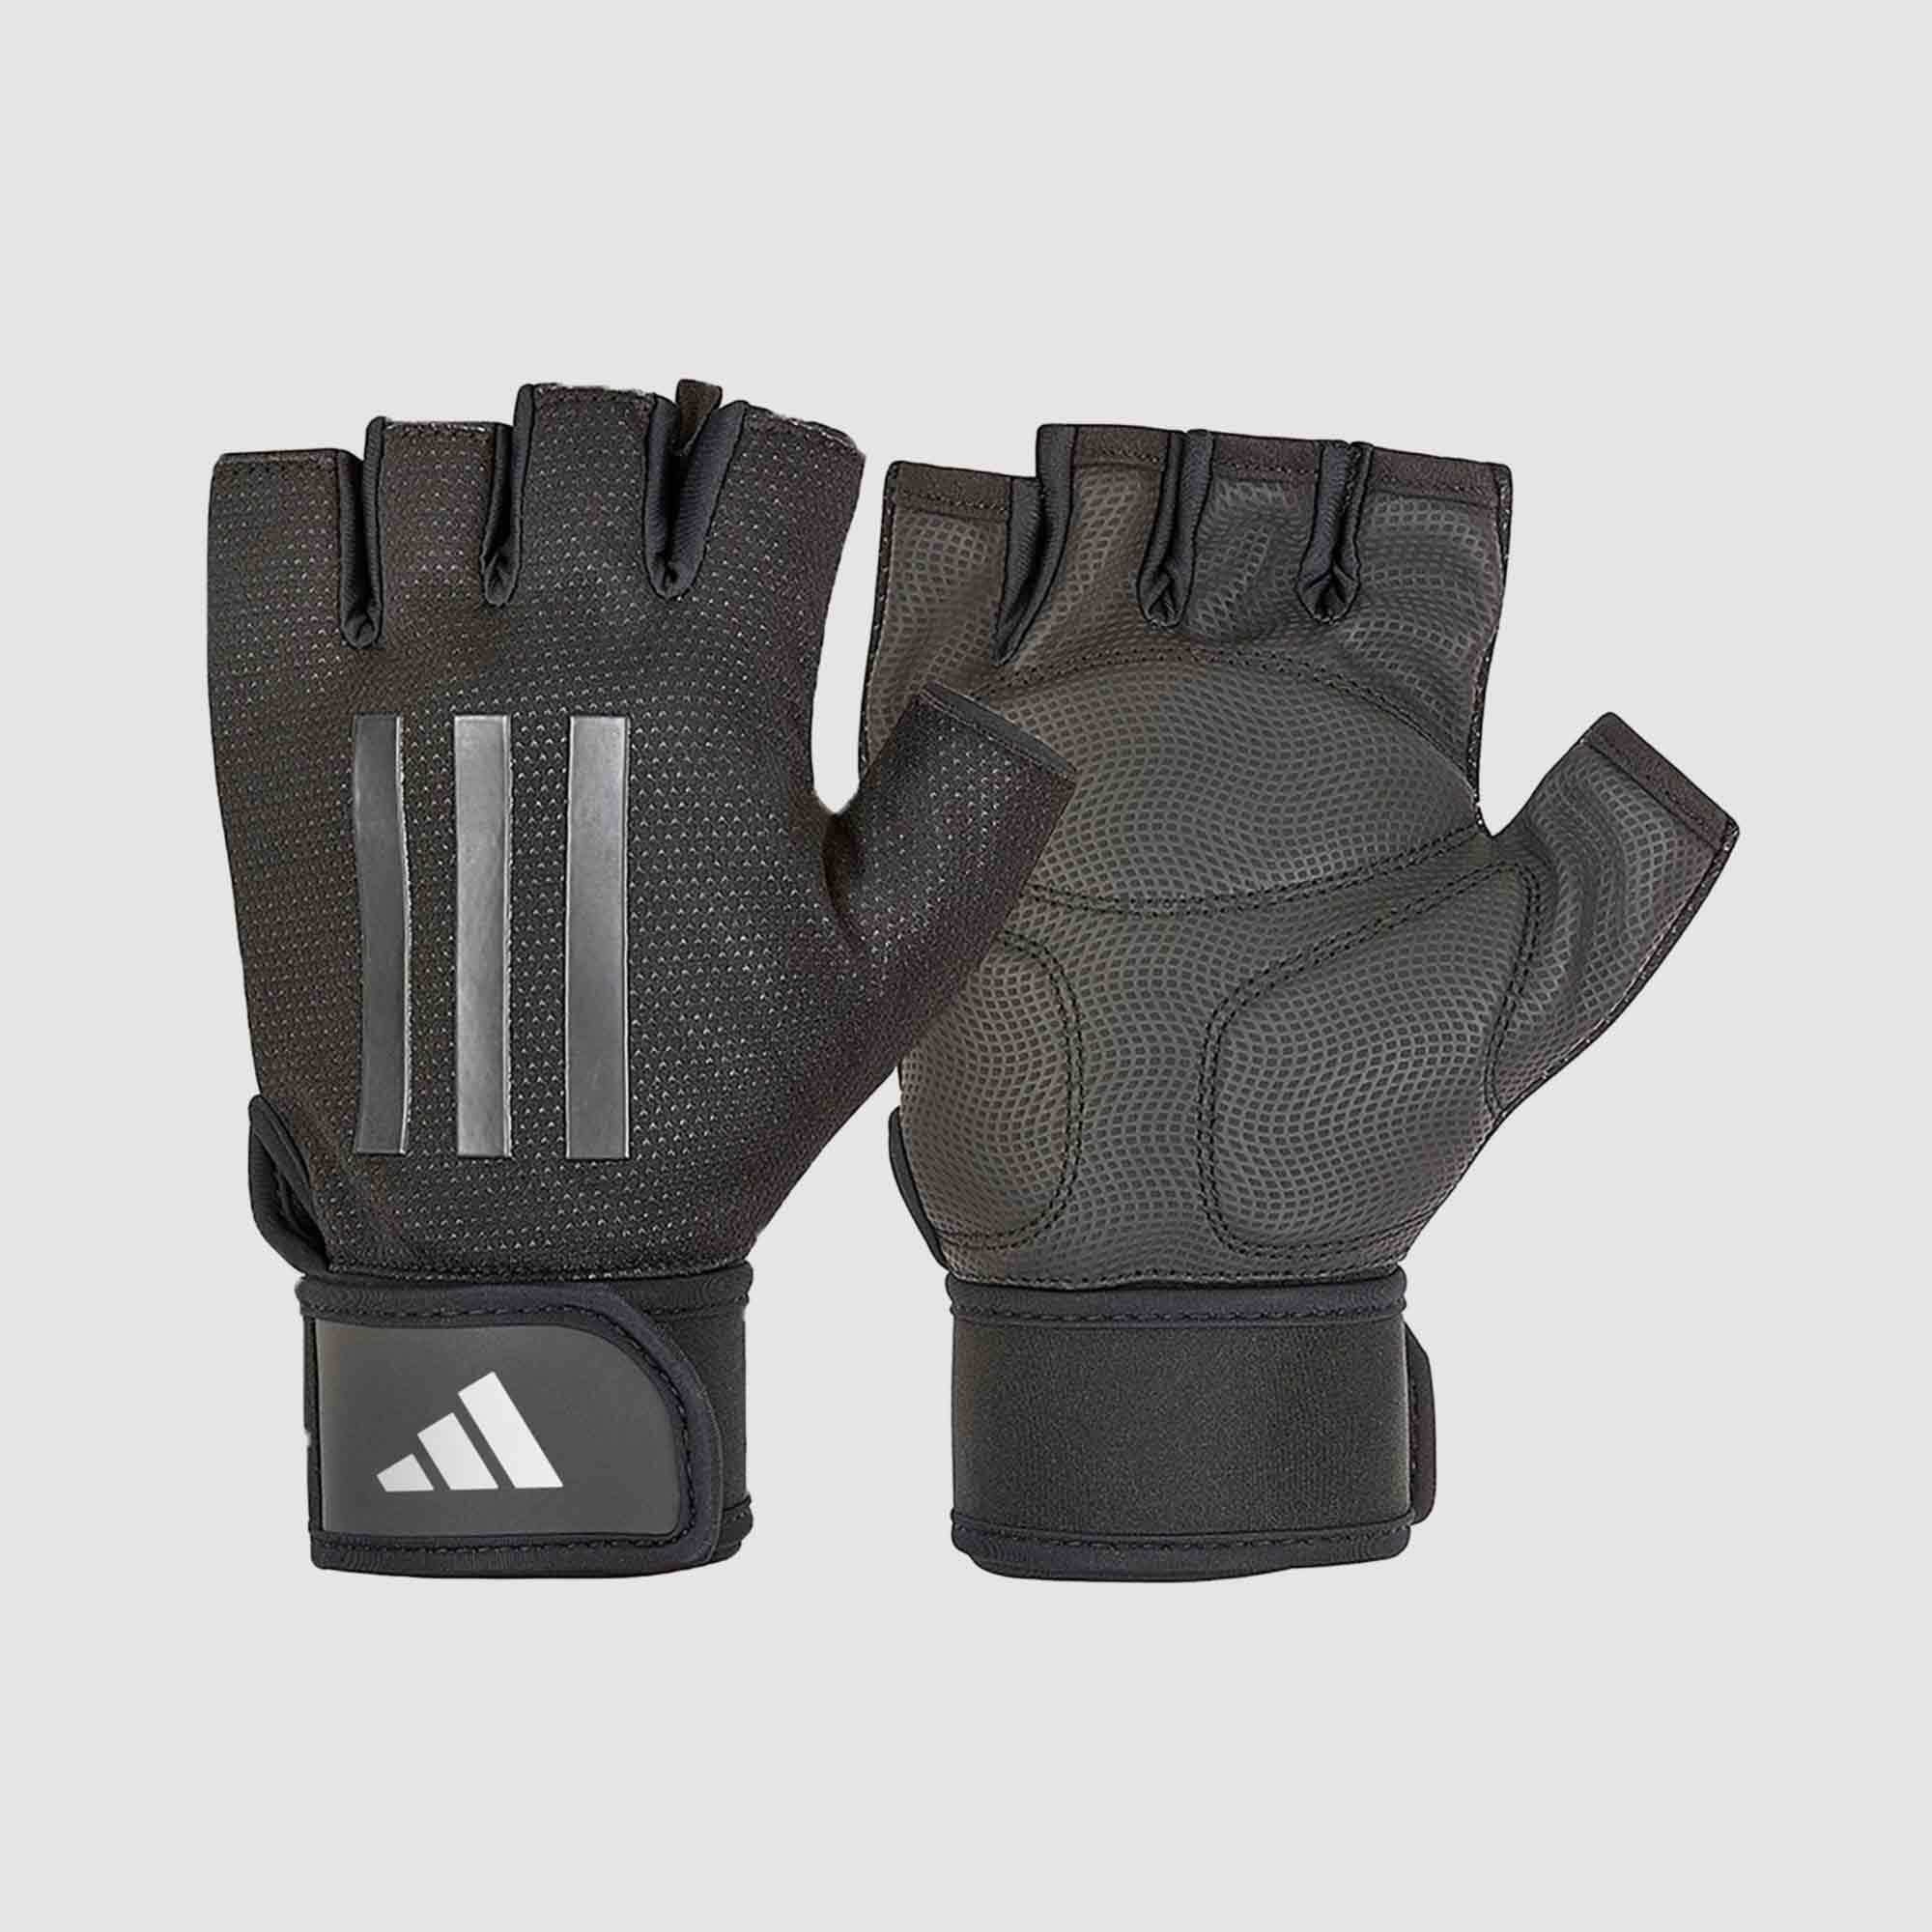 adidas elite training gloves